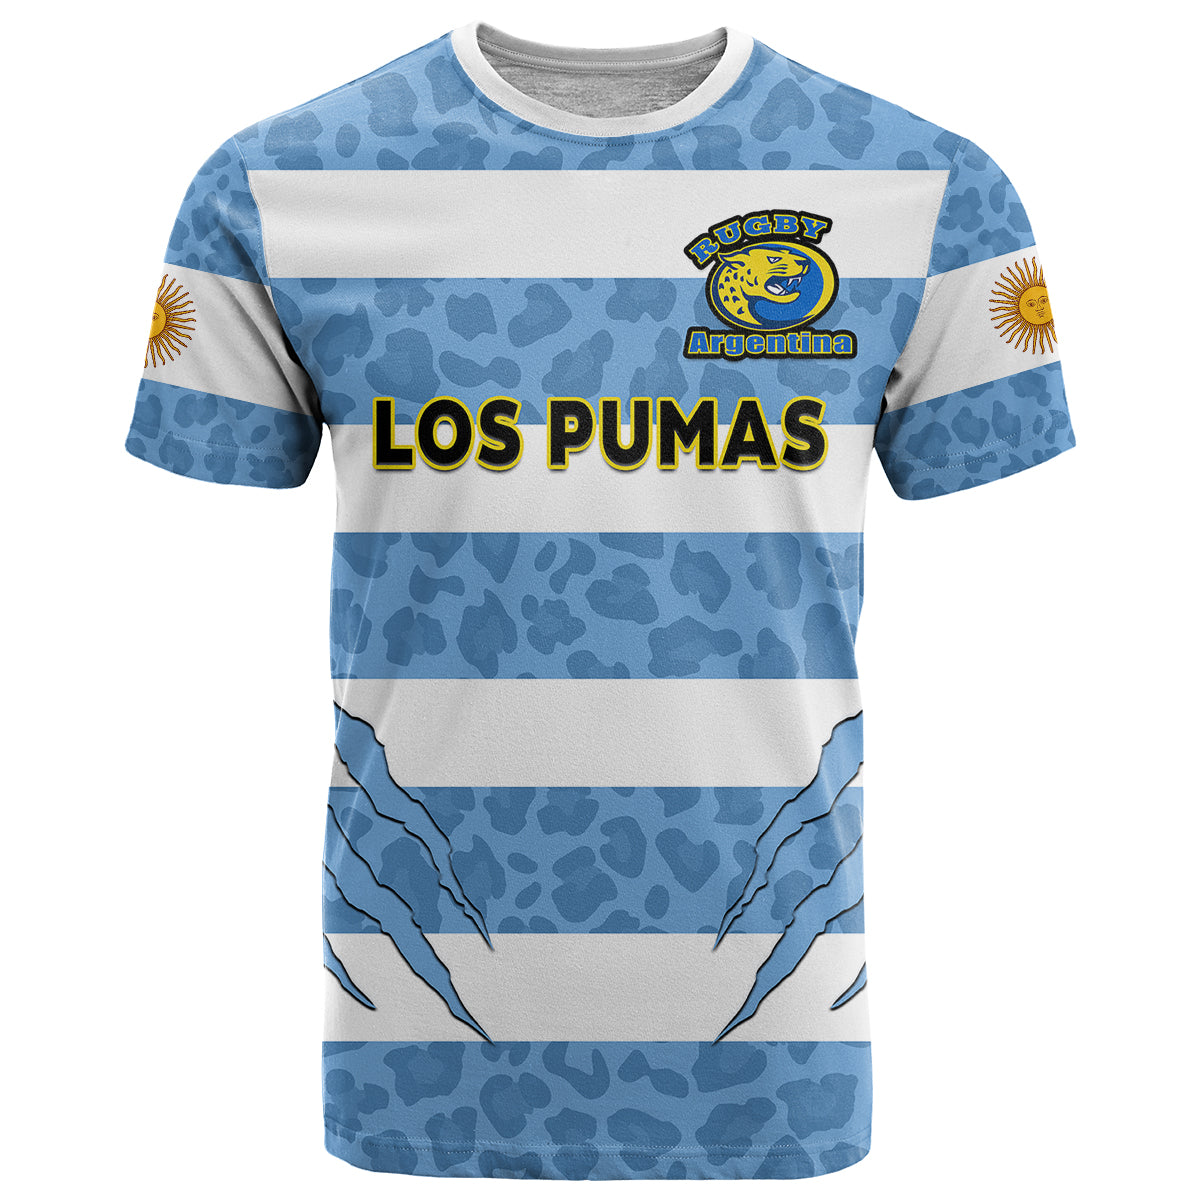 argentina-rugby-7s-vamos-pumas-t-shirt